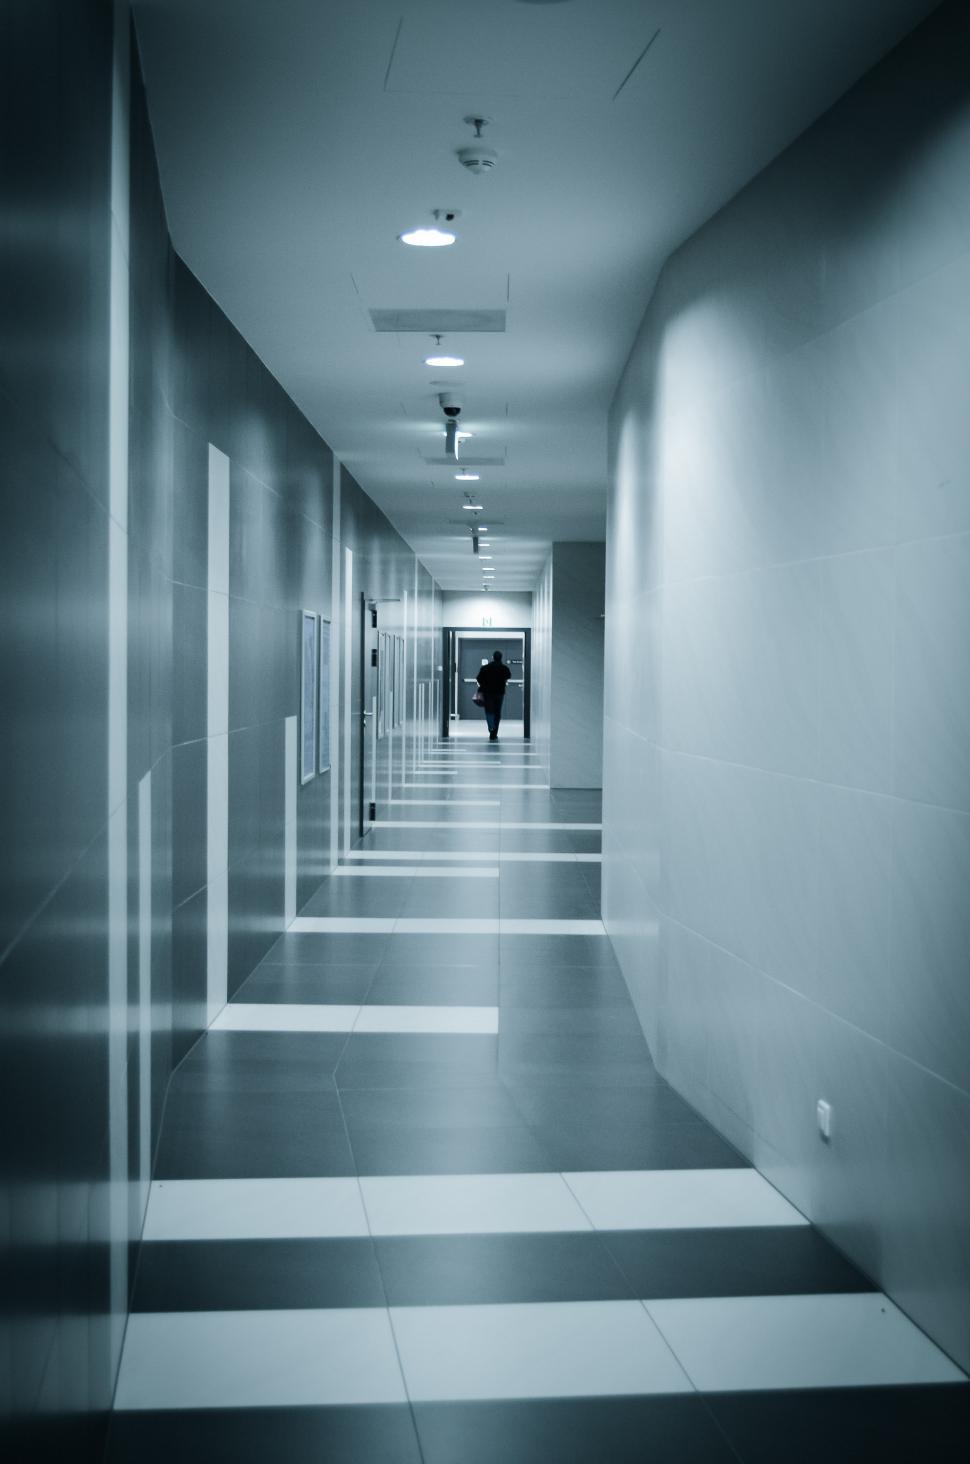 Free Image of A Monochrome Hallway 